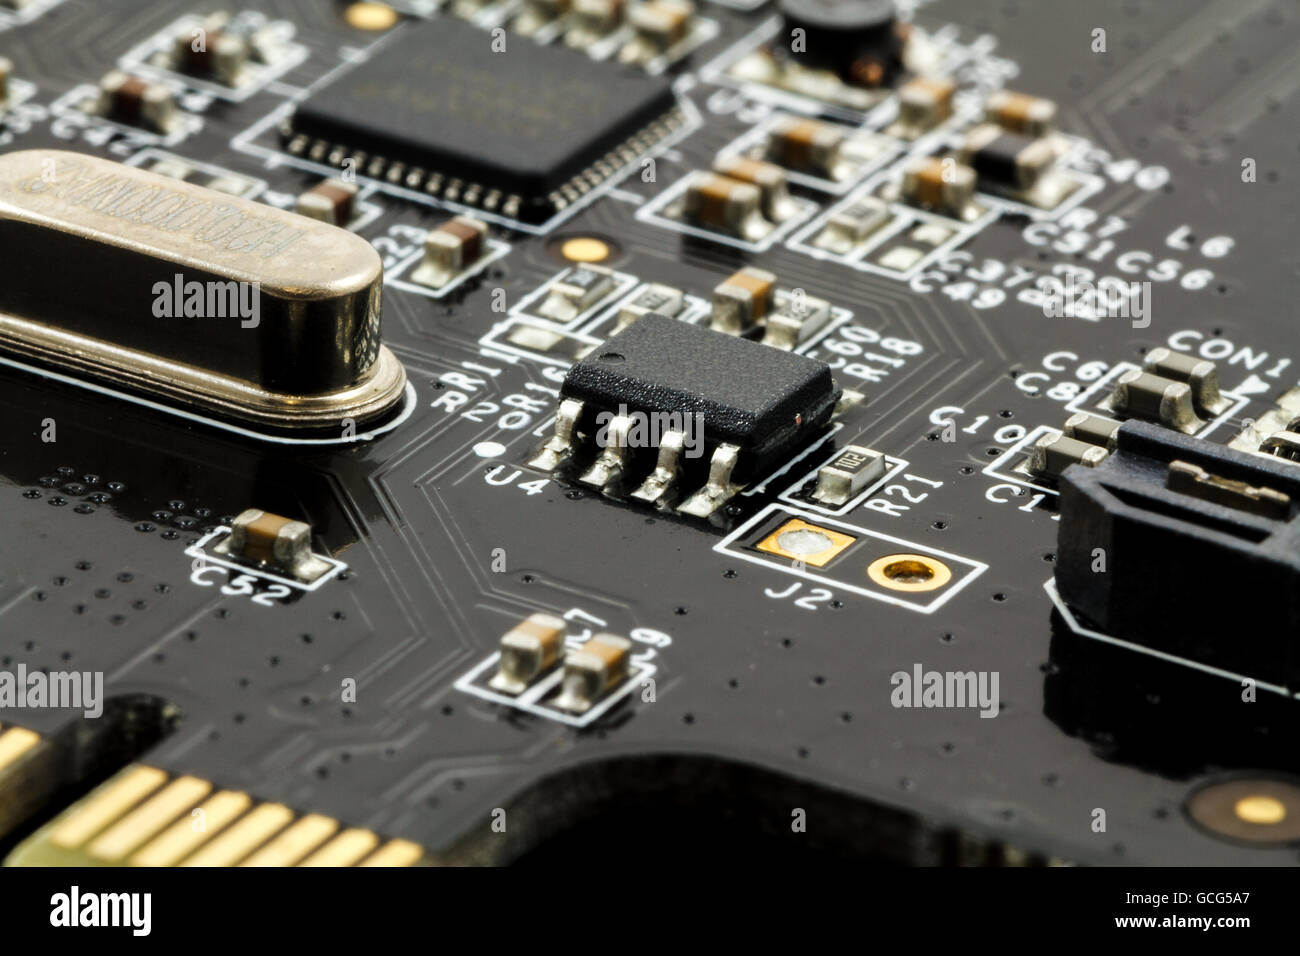 Printed Circuit Board (PCB) with, ICs, Capacitors, and Resistors Stock Photo